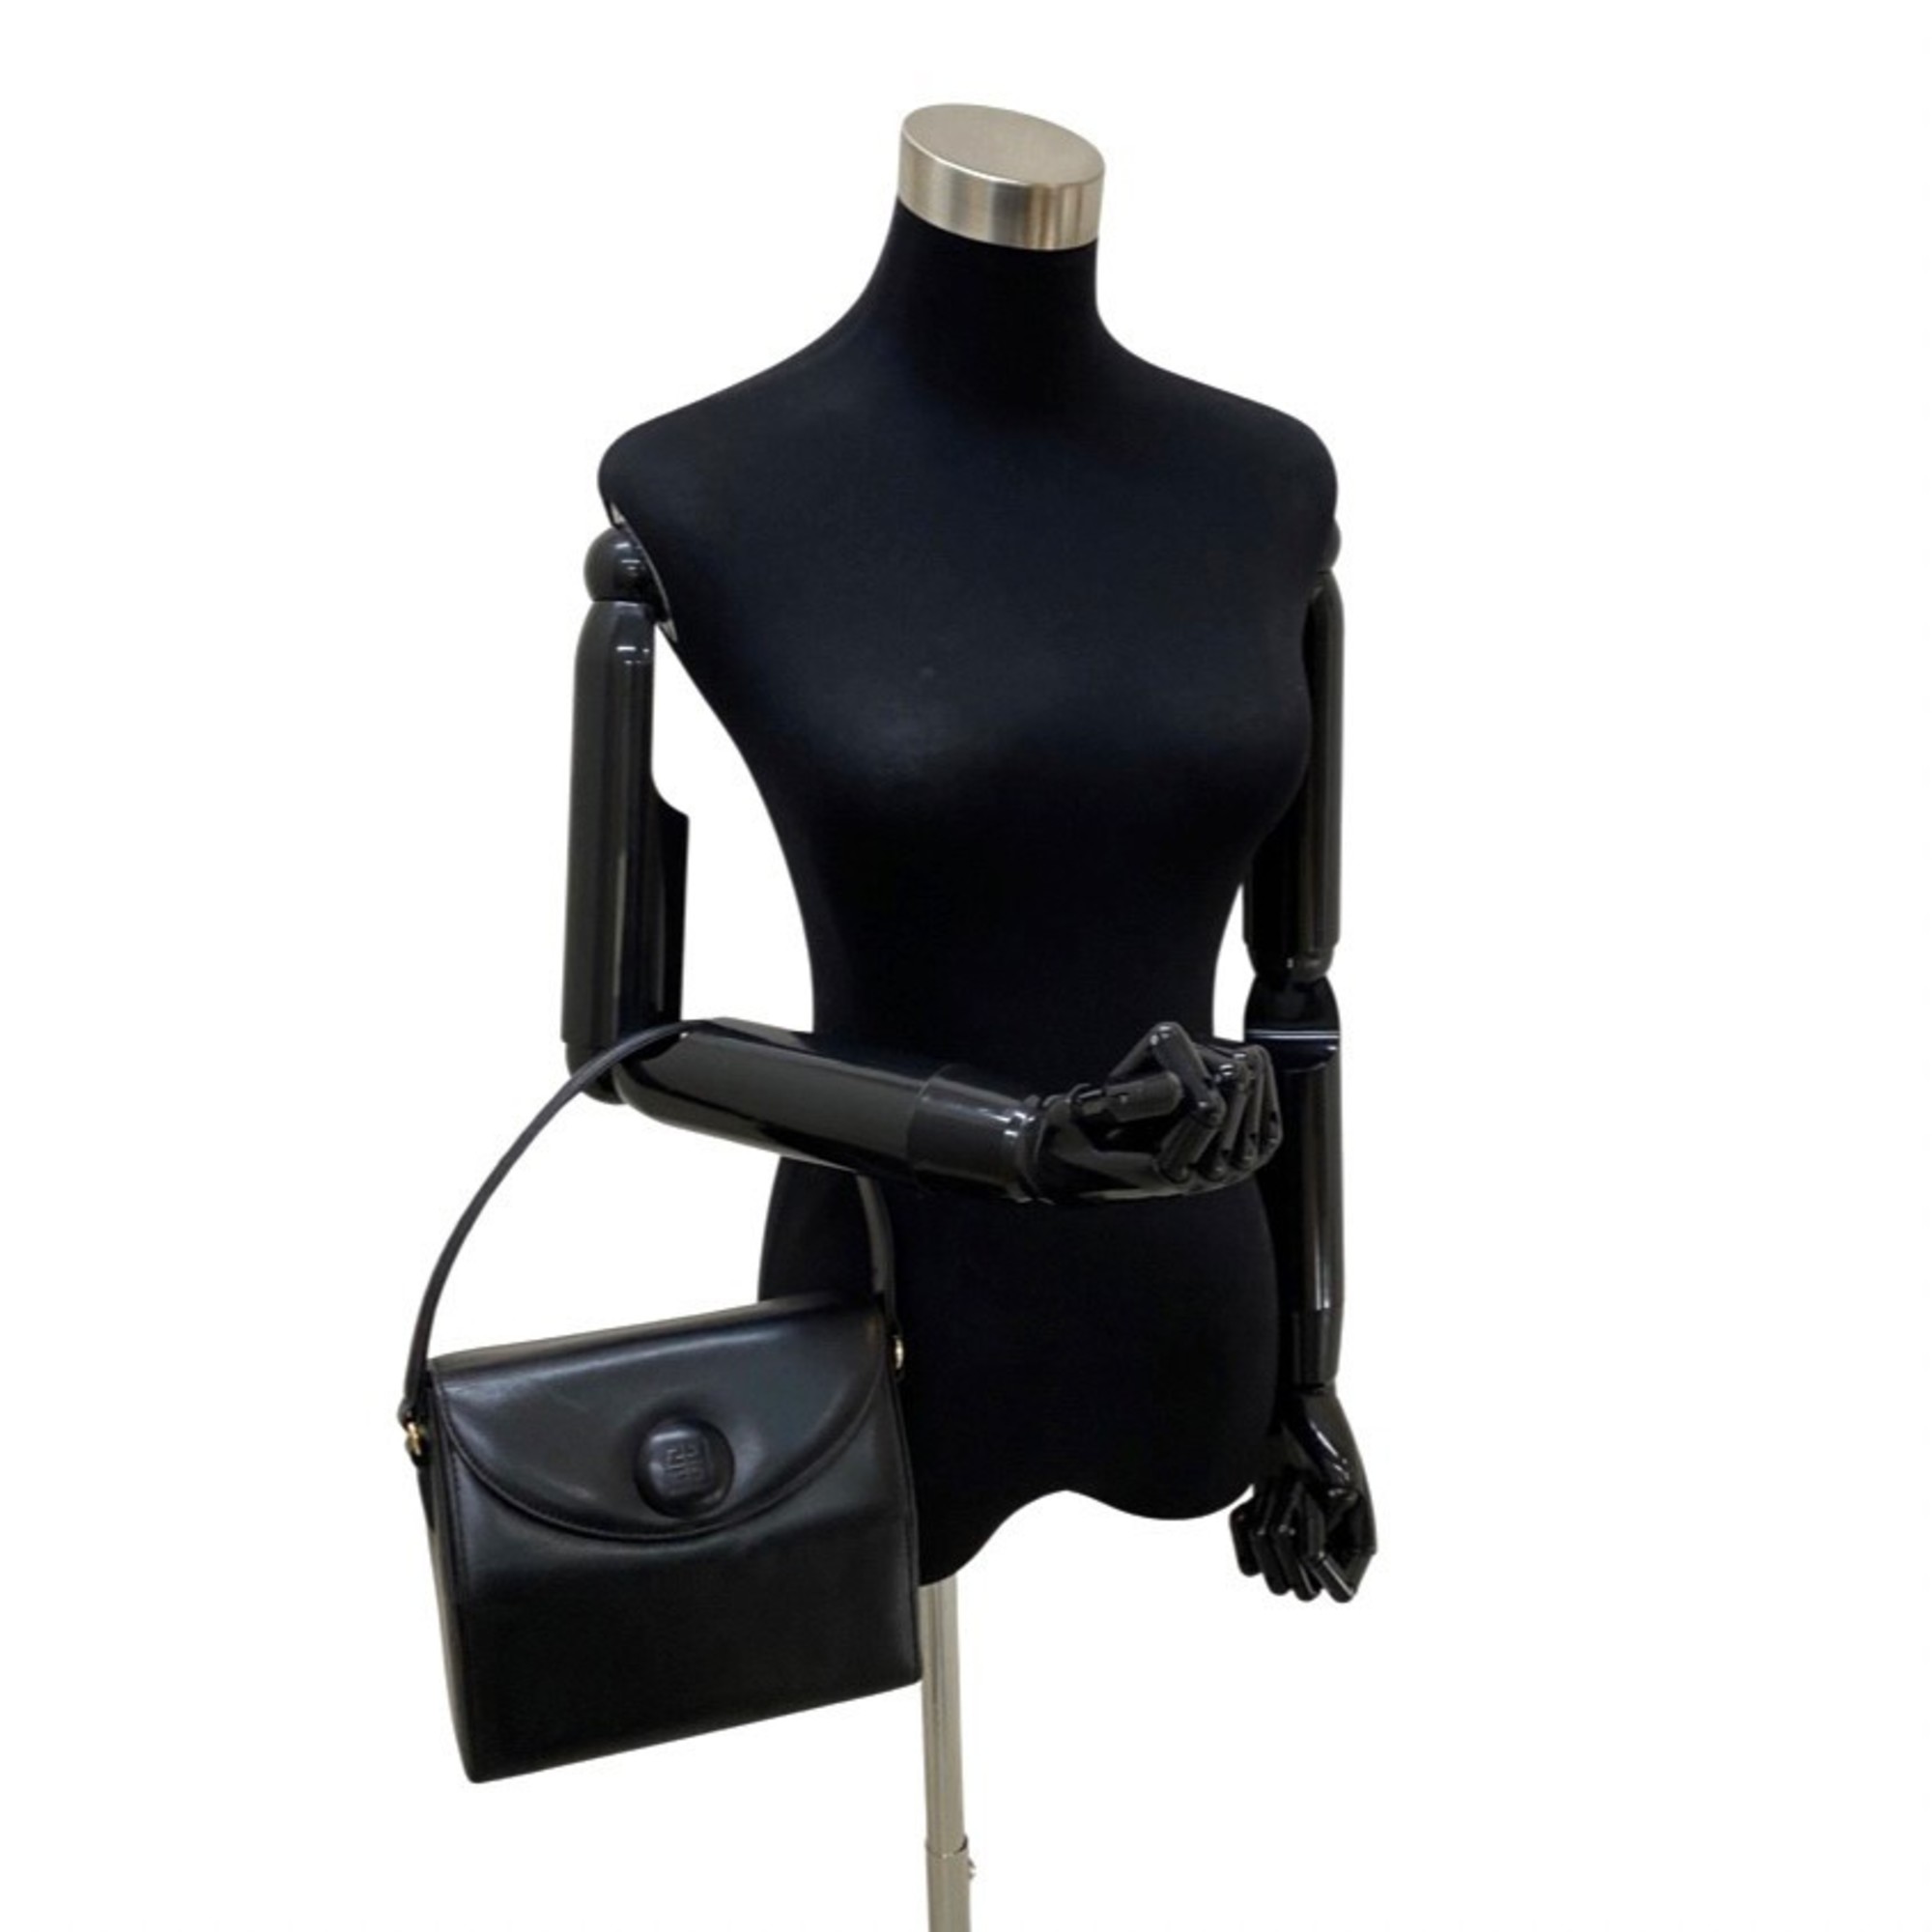 GIVENCHY Givenchy 4G logo metal fittings leather genuine handbag mini tote bag black